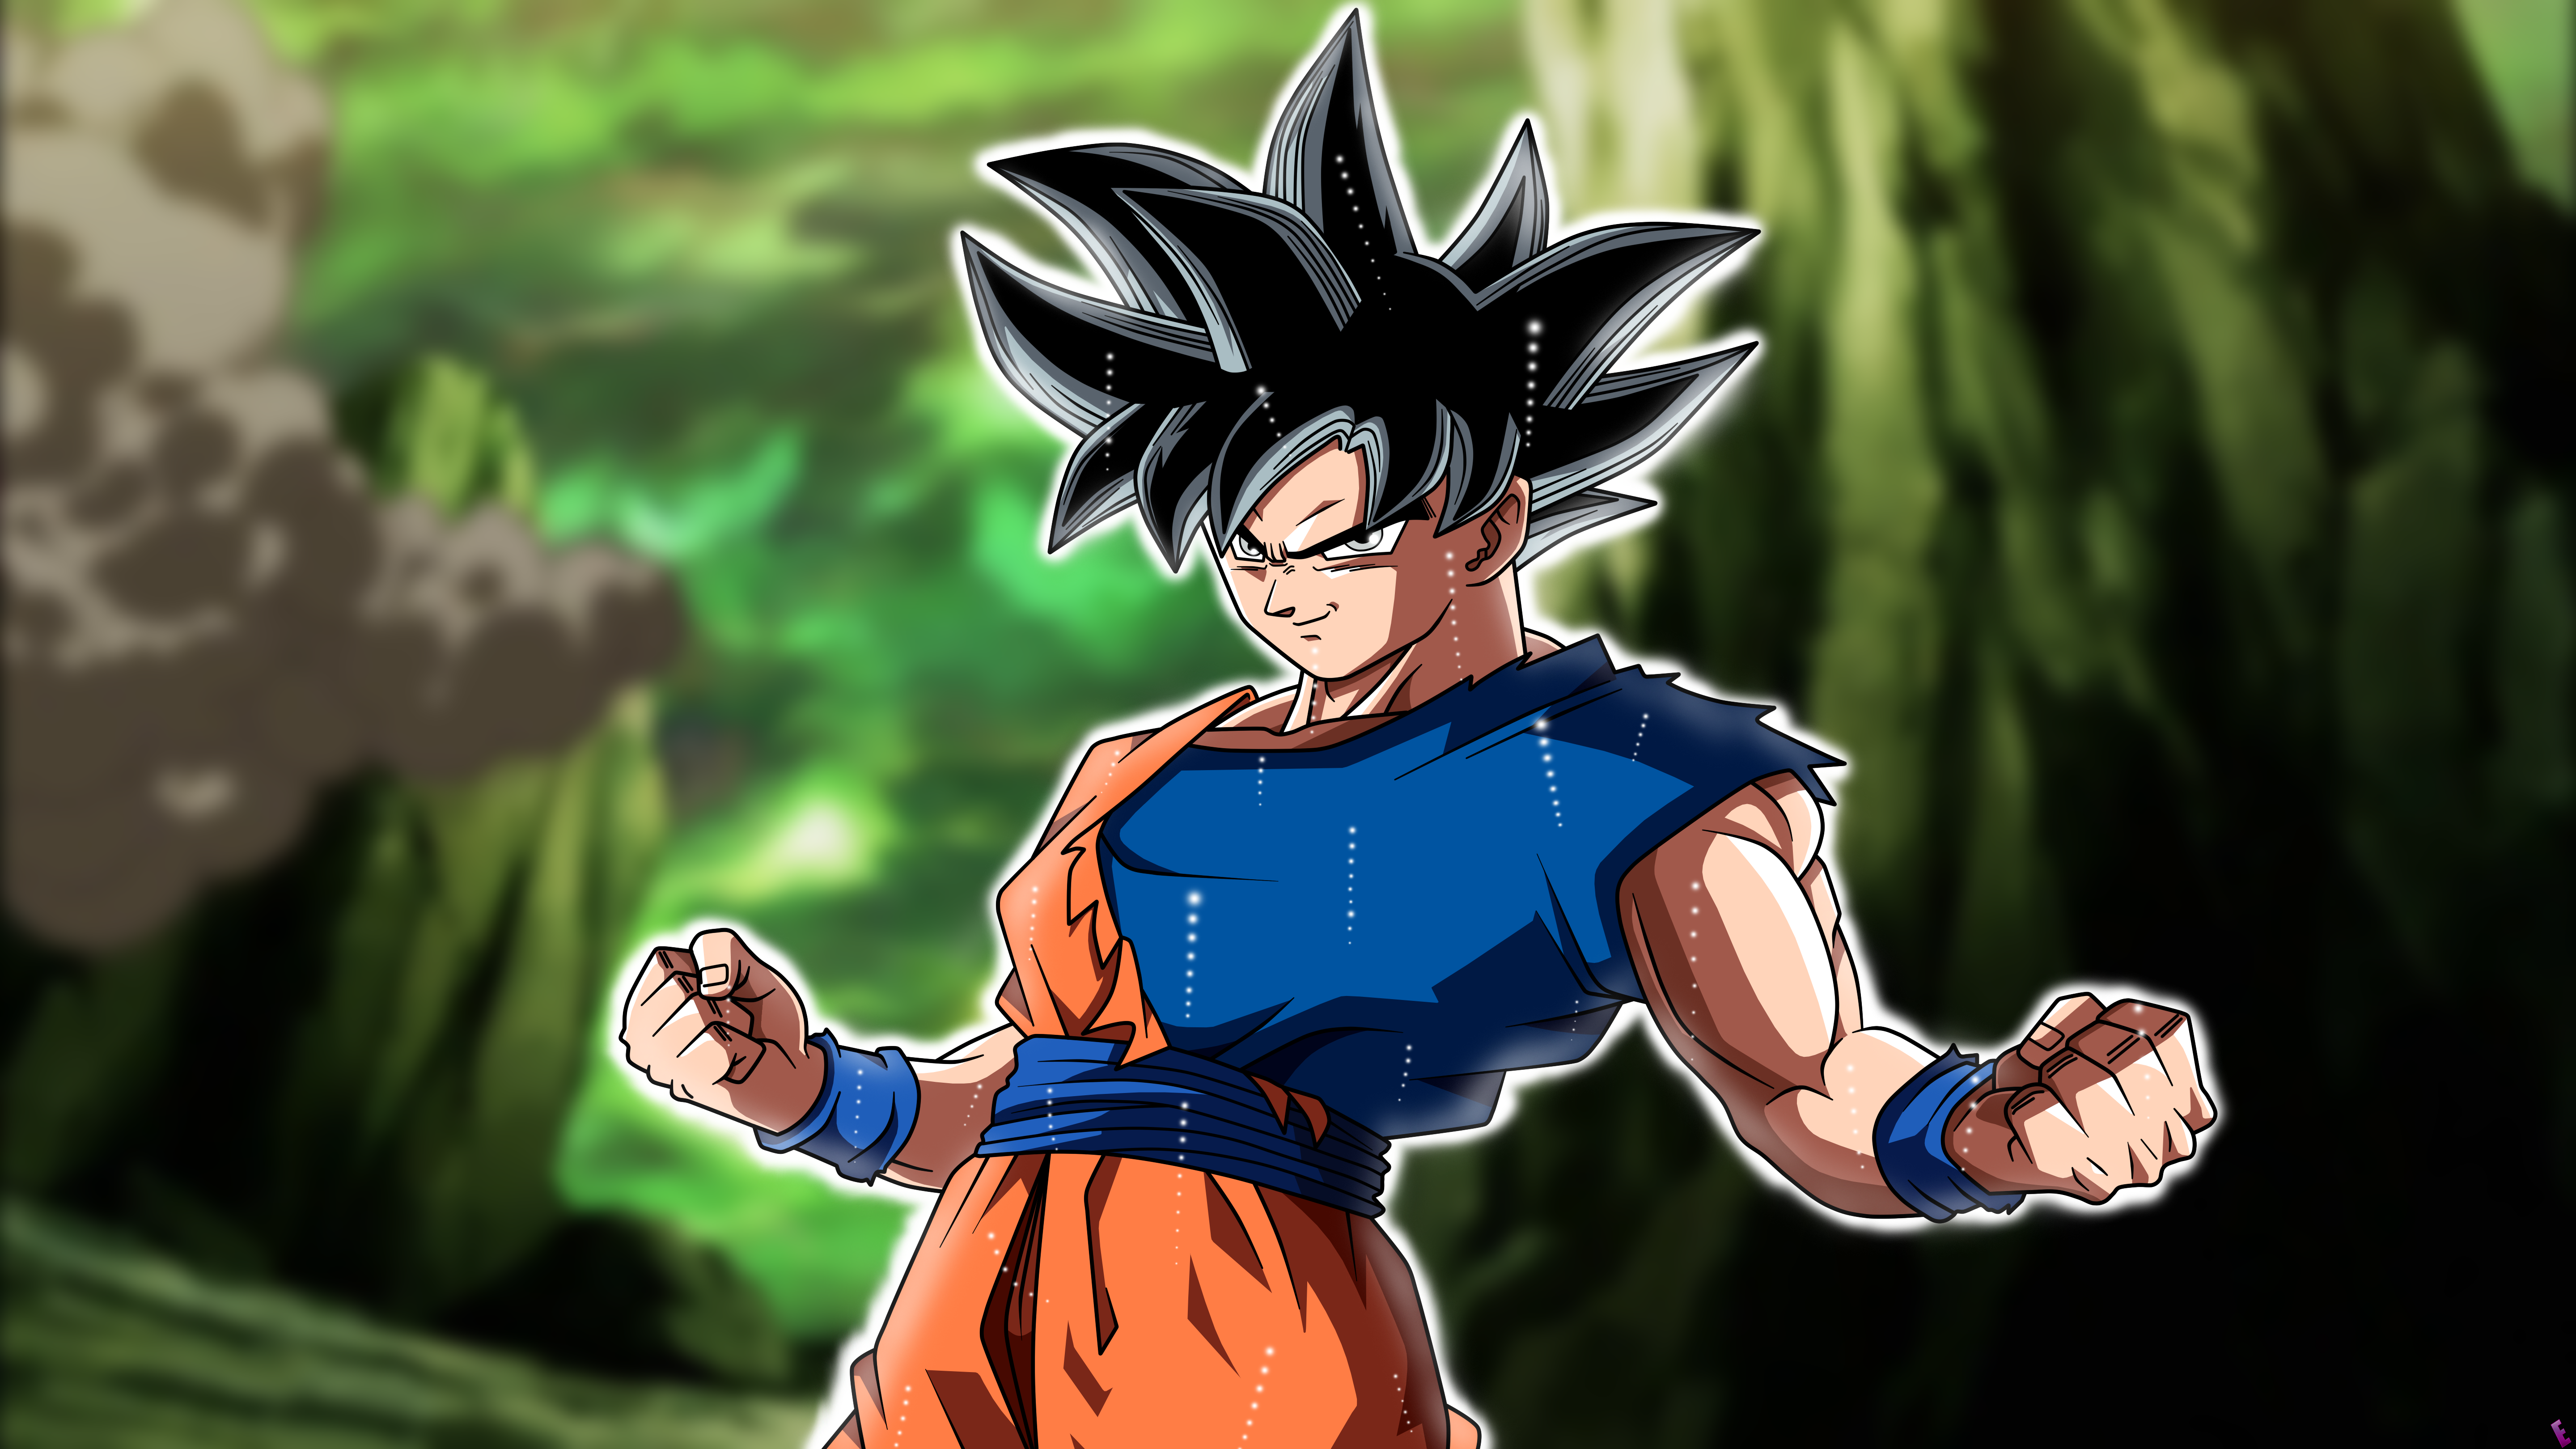 Goku by Goku_Migatte_No_Gokui018